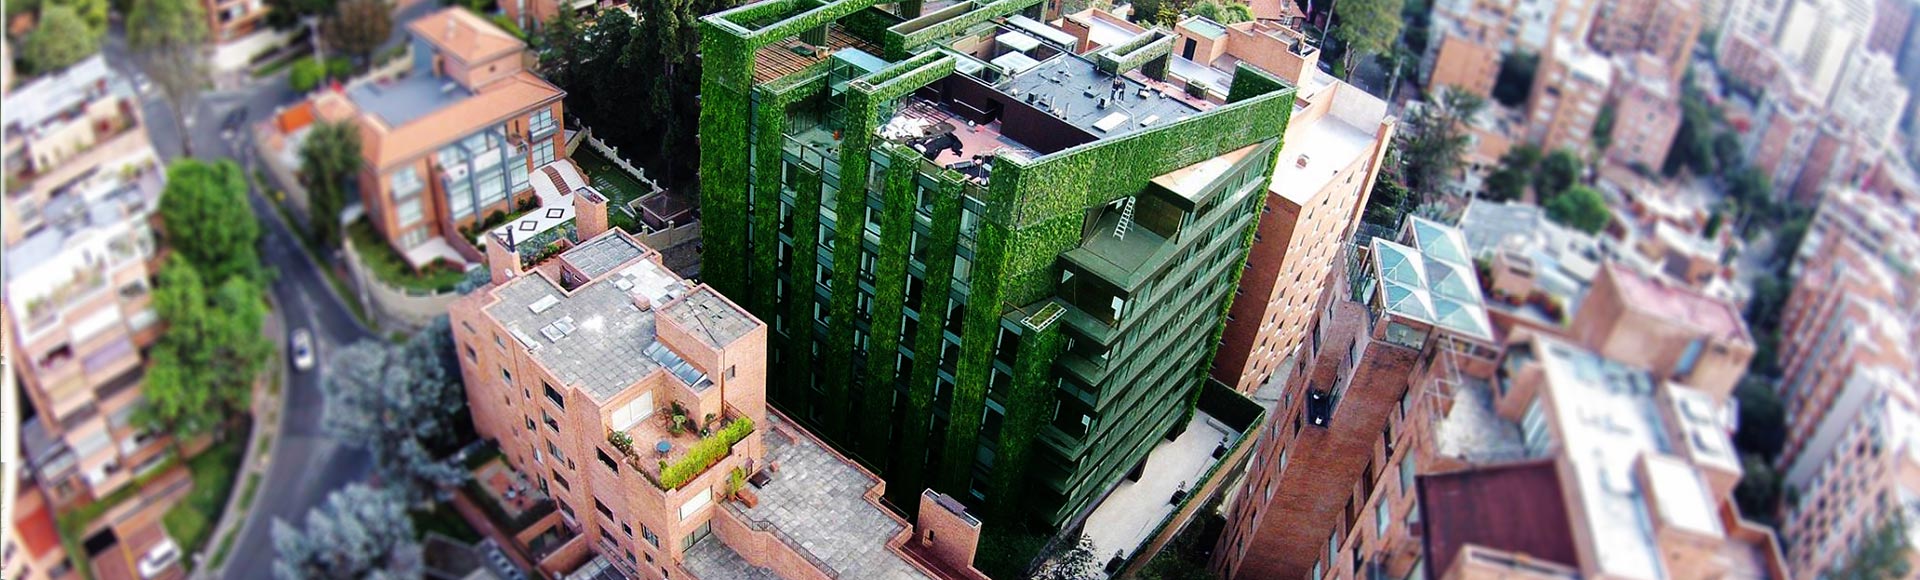 jardin vertical edificio santalaia bogota